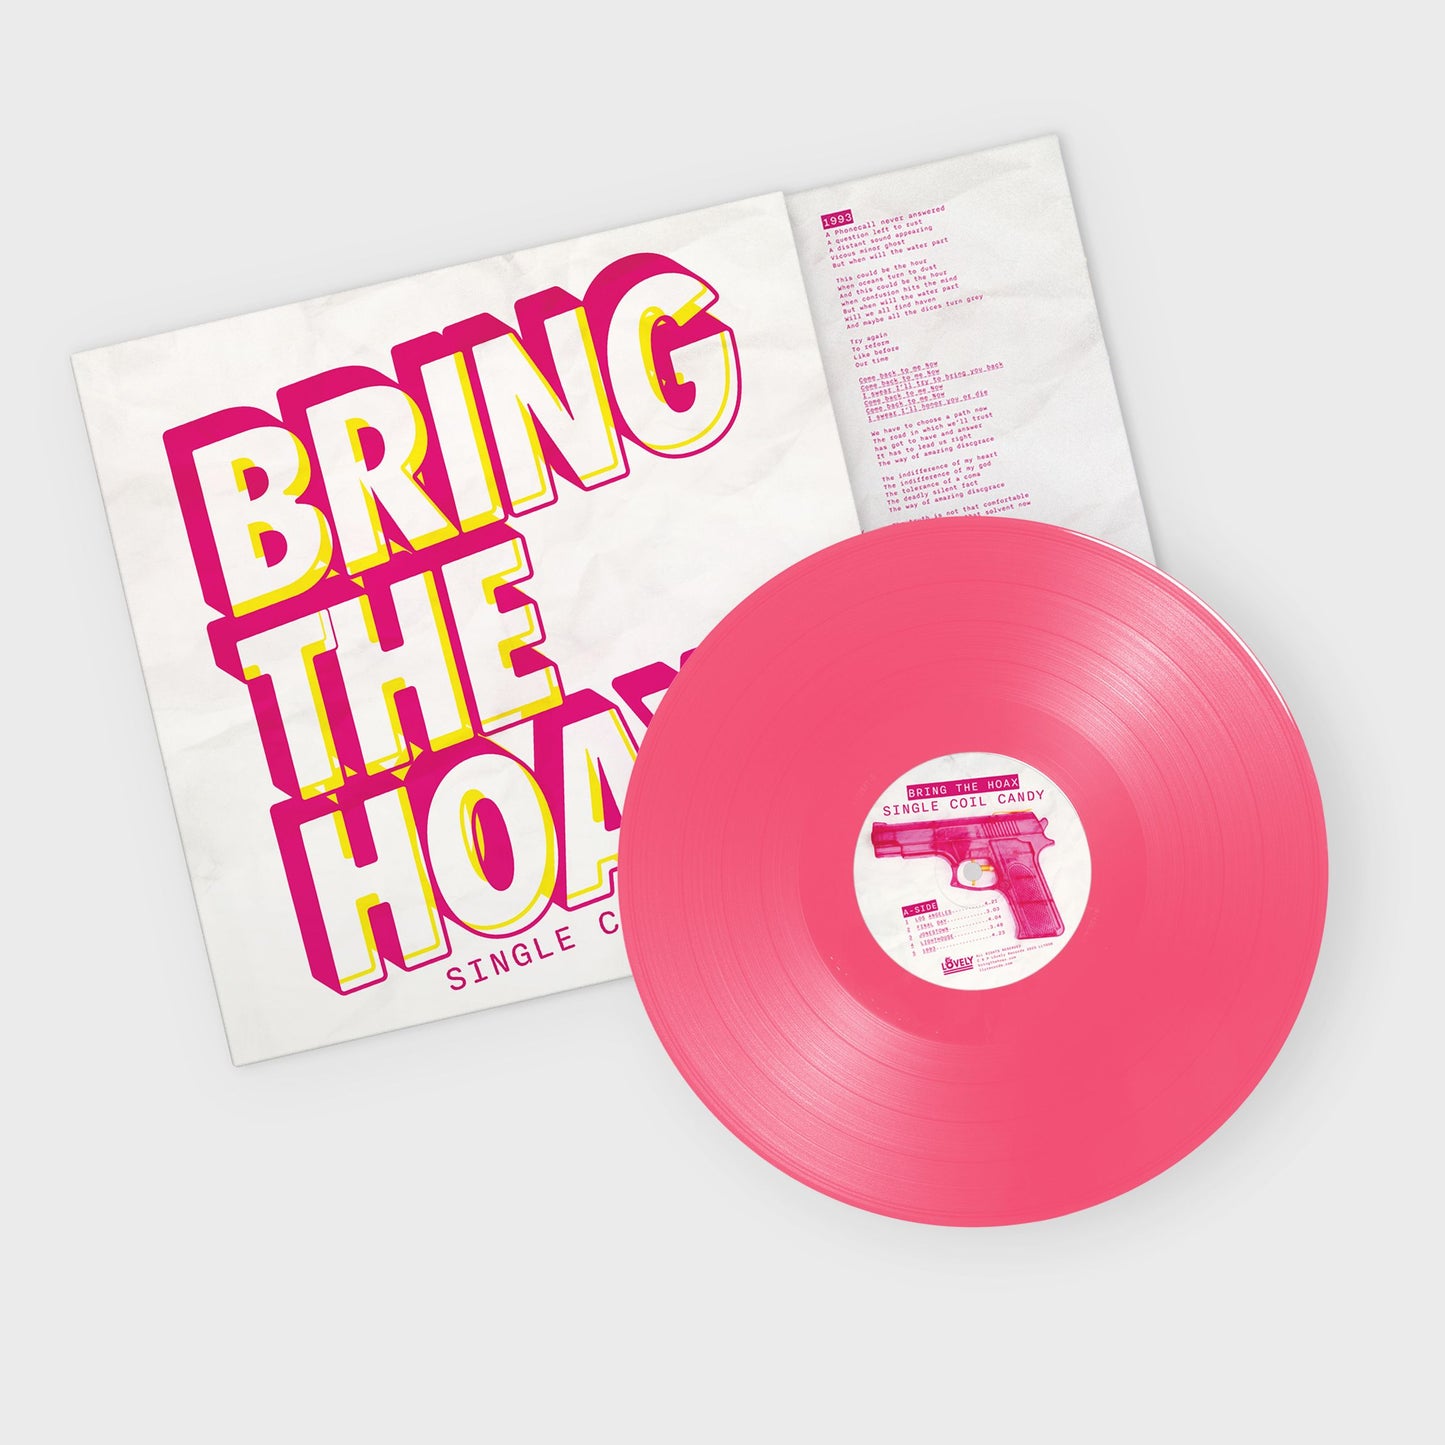 Bring The Hoax - Single Coil Candy LP (LTD Pink Vinyl)